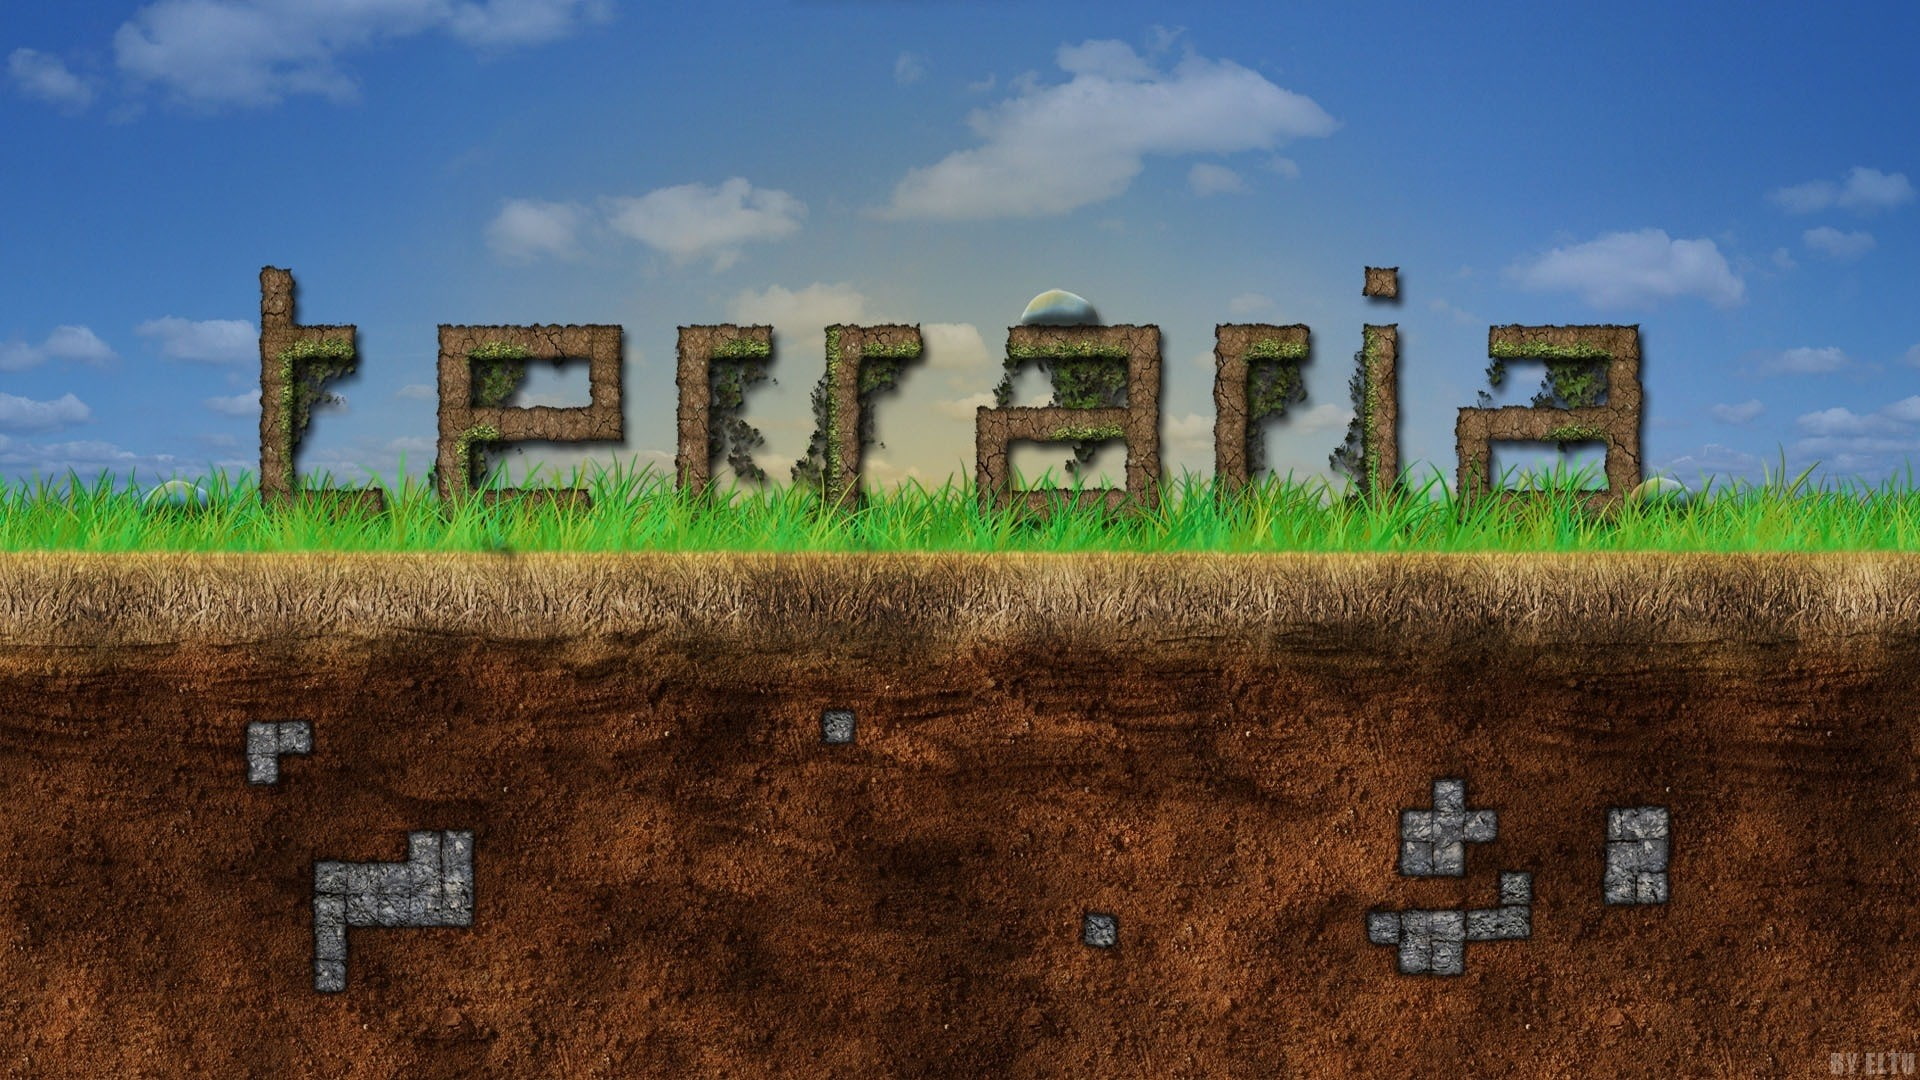 Terraria, Ground, Grass, Sky, text, nature, western script